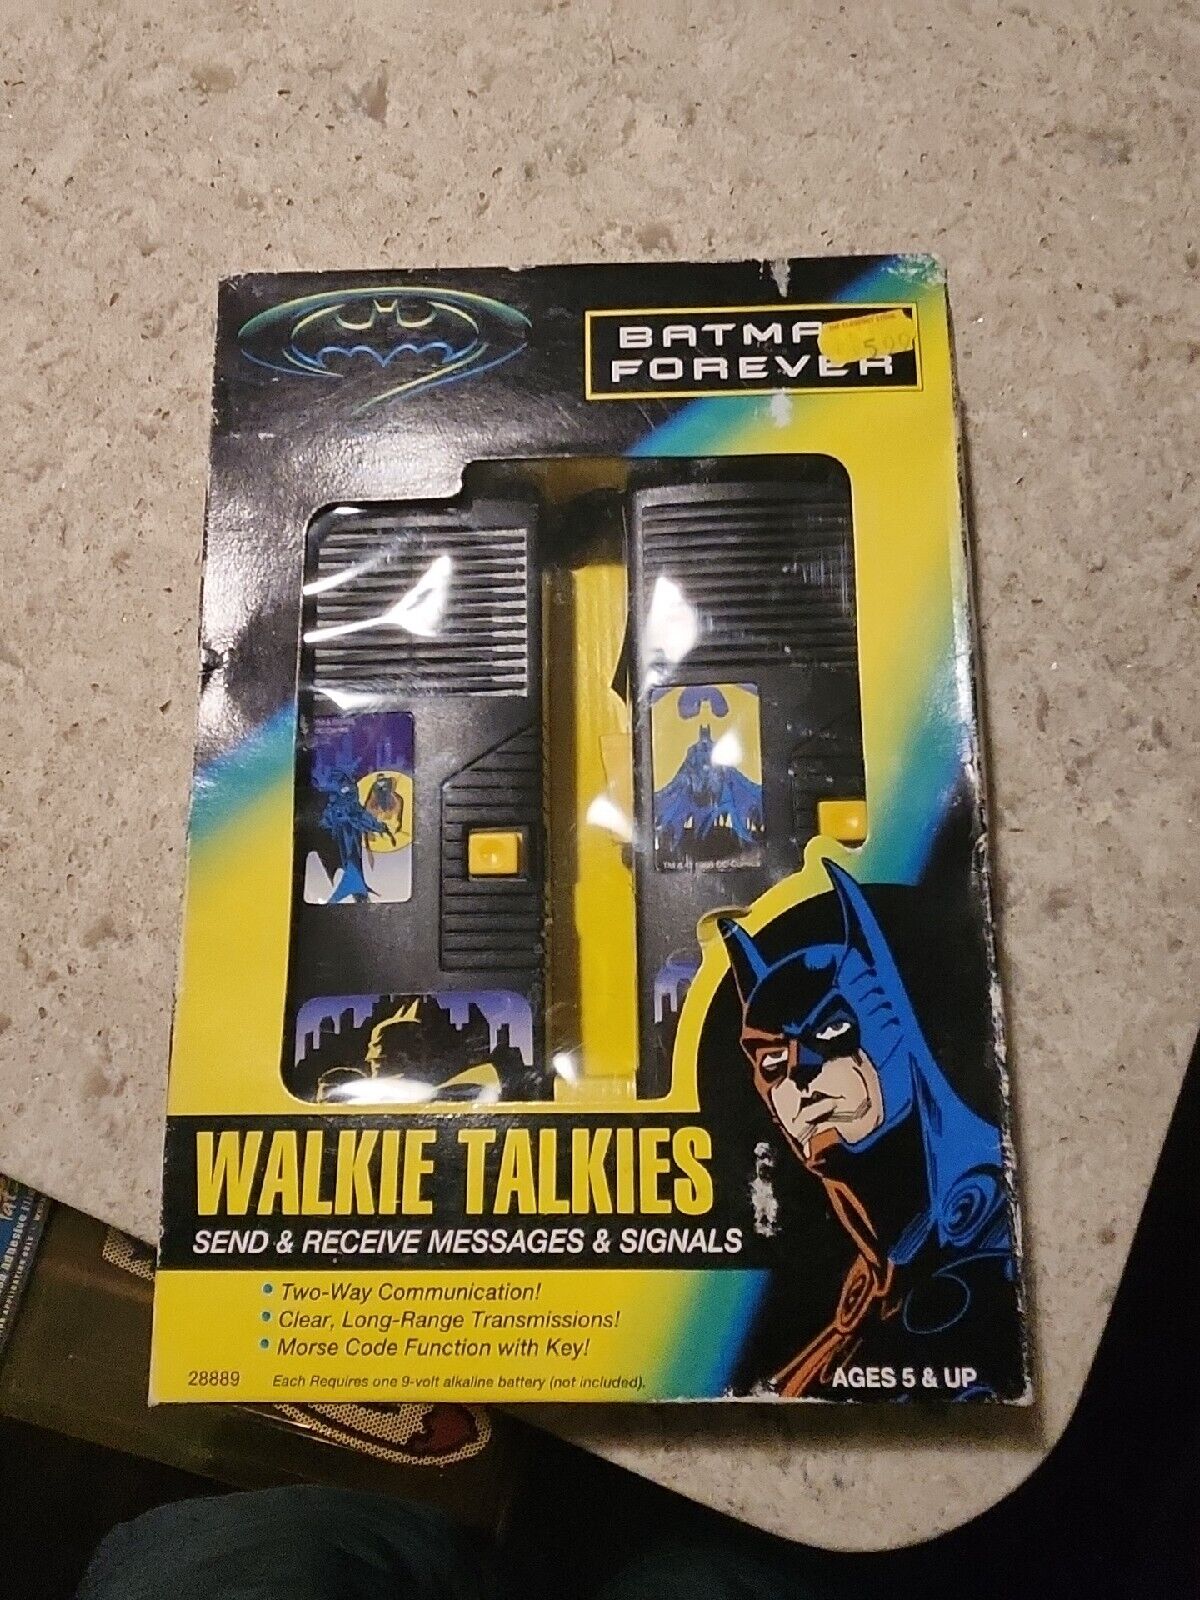 RARE VINTAGE BATMAN FOREVER 1995 WALKIE TALKIES NEW IN BOX